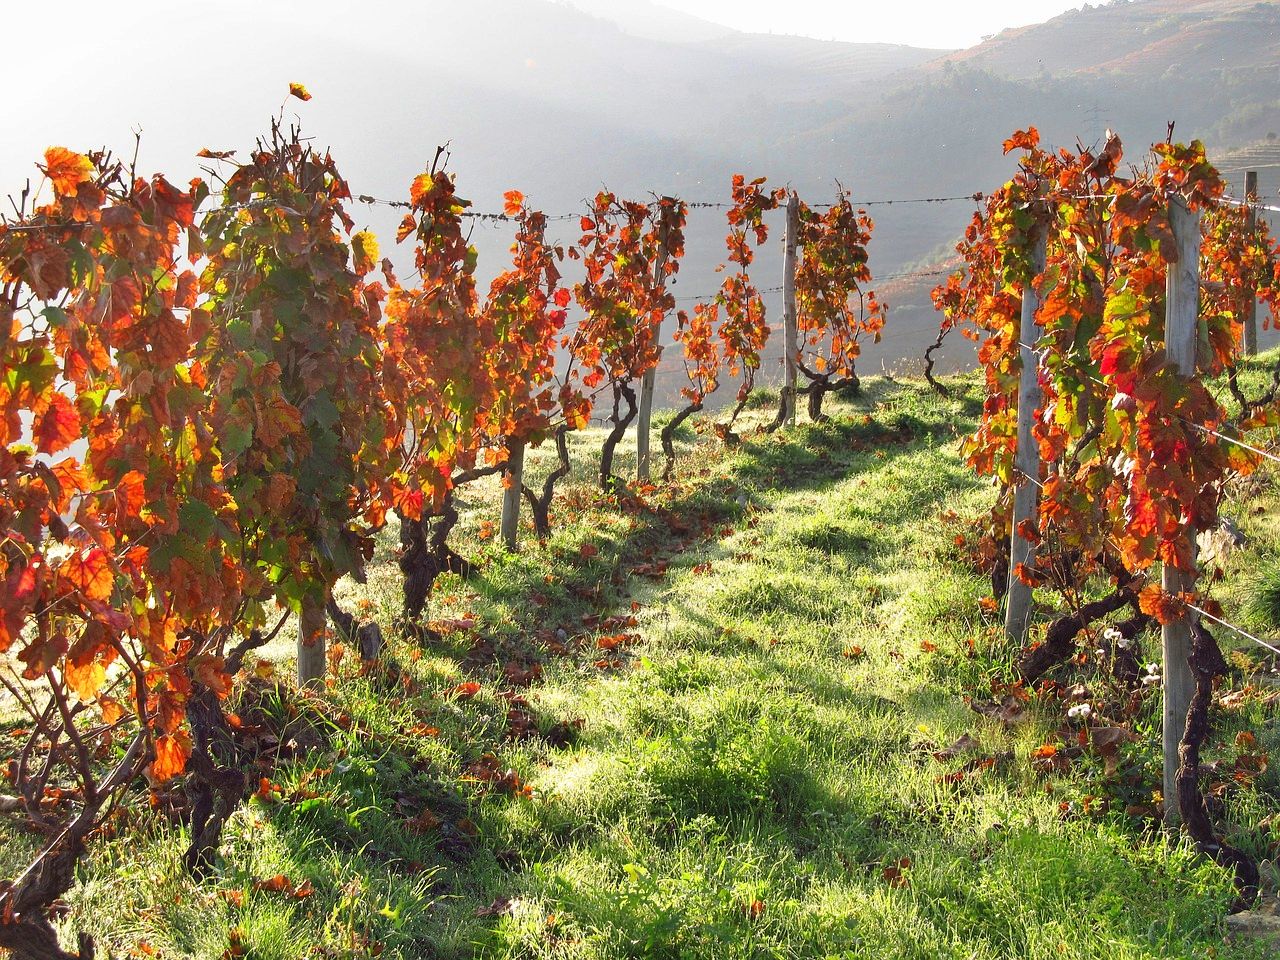 Douro vineyard, northern Portugal